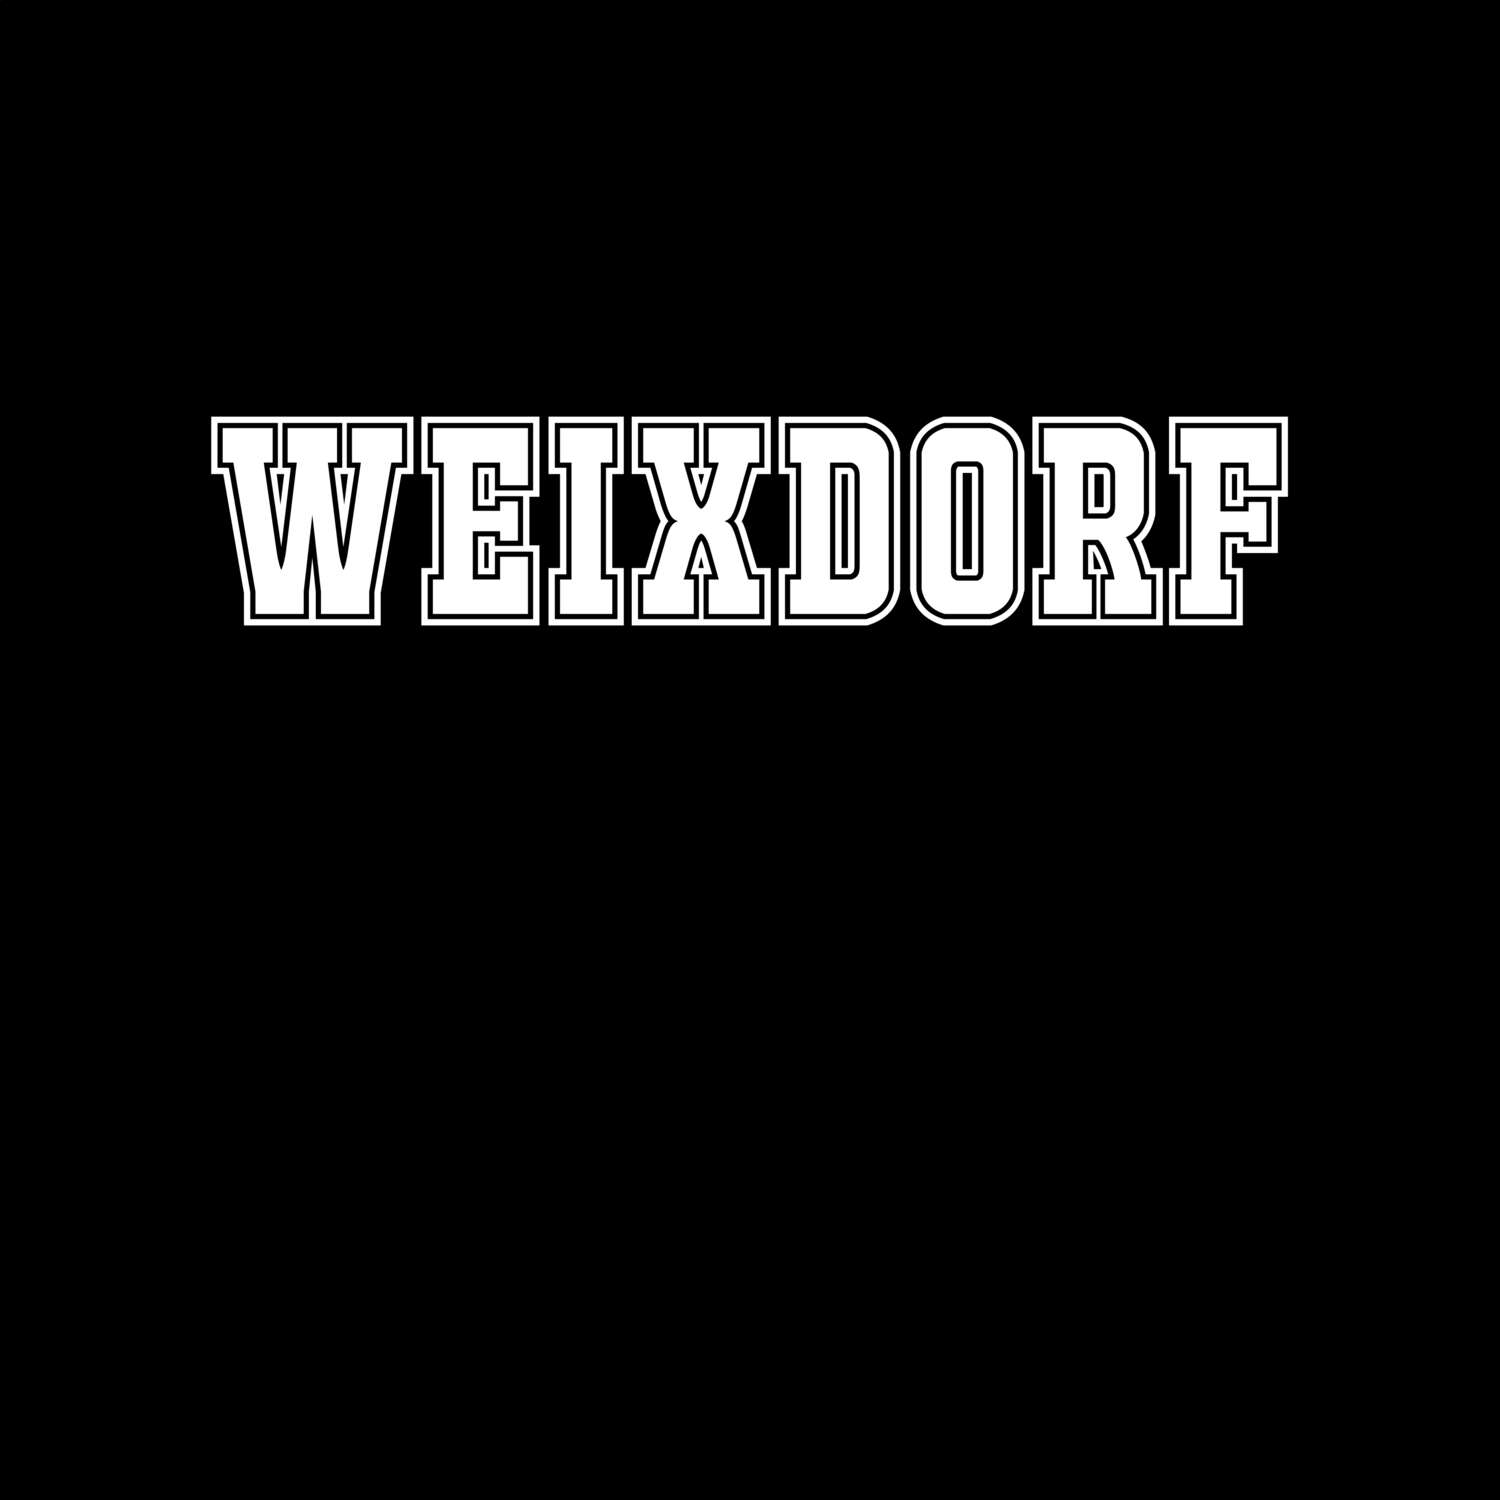 Weixdorf T-Shirt »Classic«